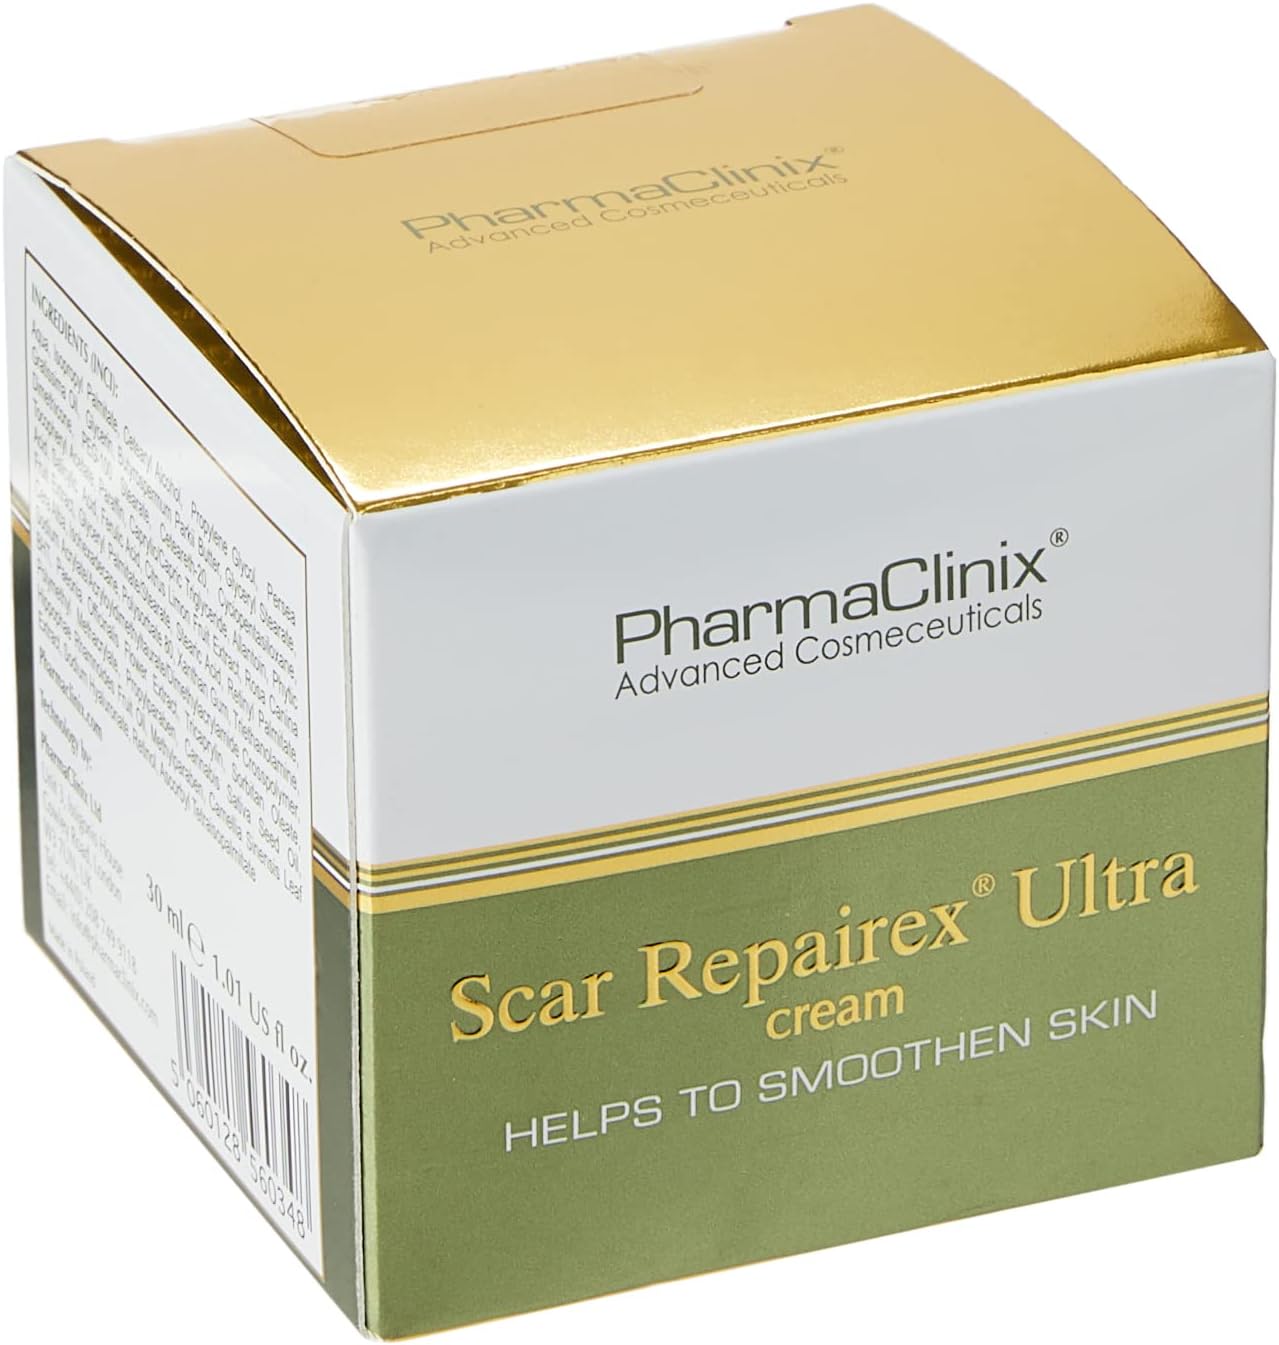 PharmaClinix Scar Repairex Ultra Scar Treatment Cream, 30 g

